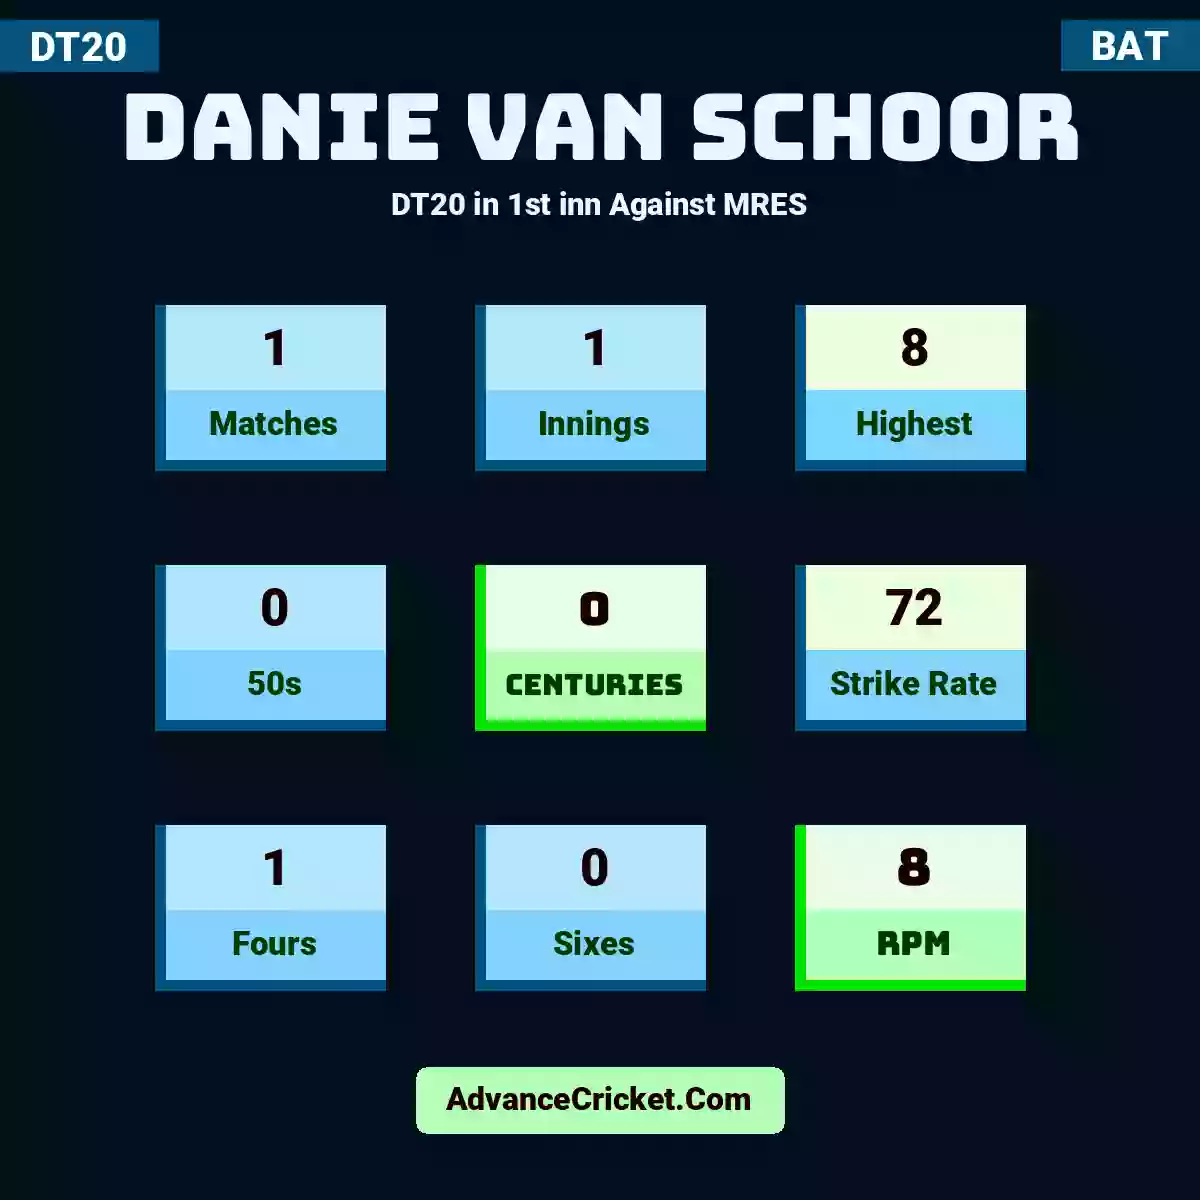 Danie van Schoor DT20  in 1st inn Against MRES, Danie van Schoor played 1 matches, scored 8 runs as highest, 0 half-centuries, and 0 centuries, with a strike rate of 72. D.Schoor hit 1 fours and 0 sixes, with an RPM of 8.